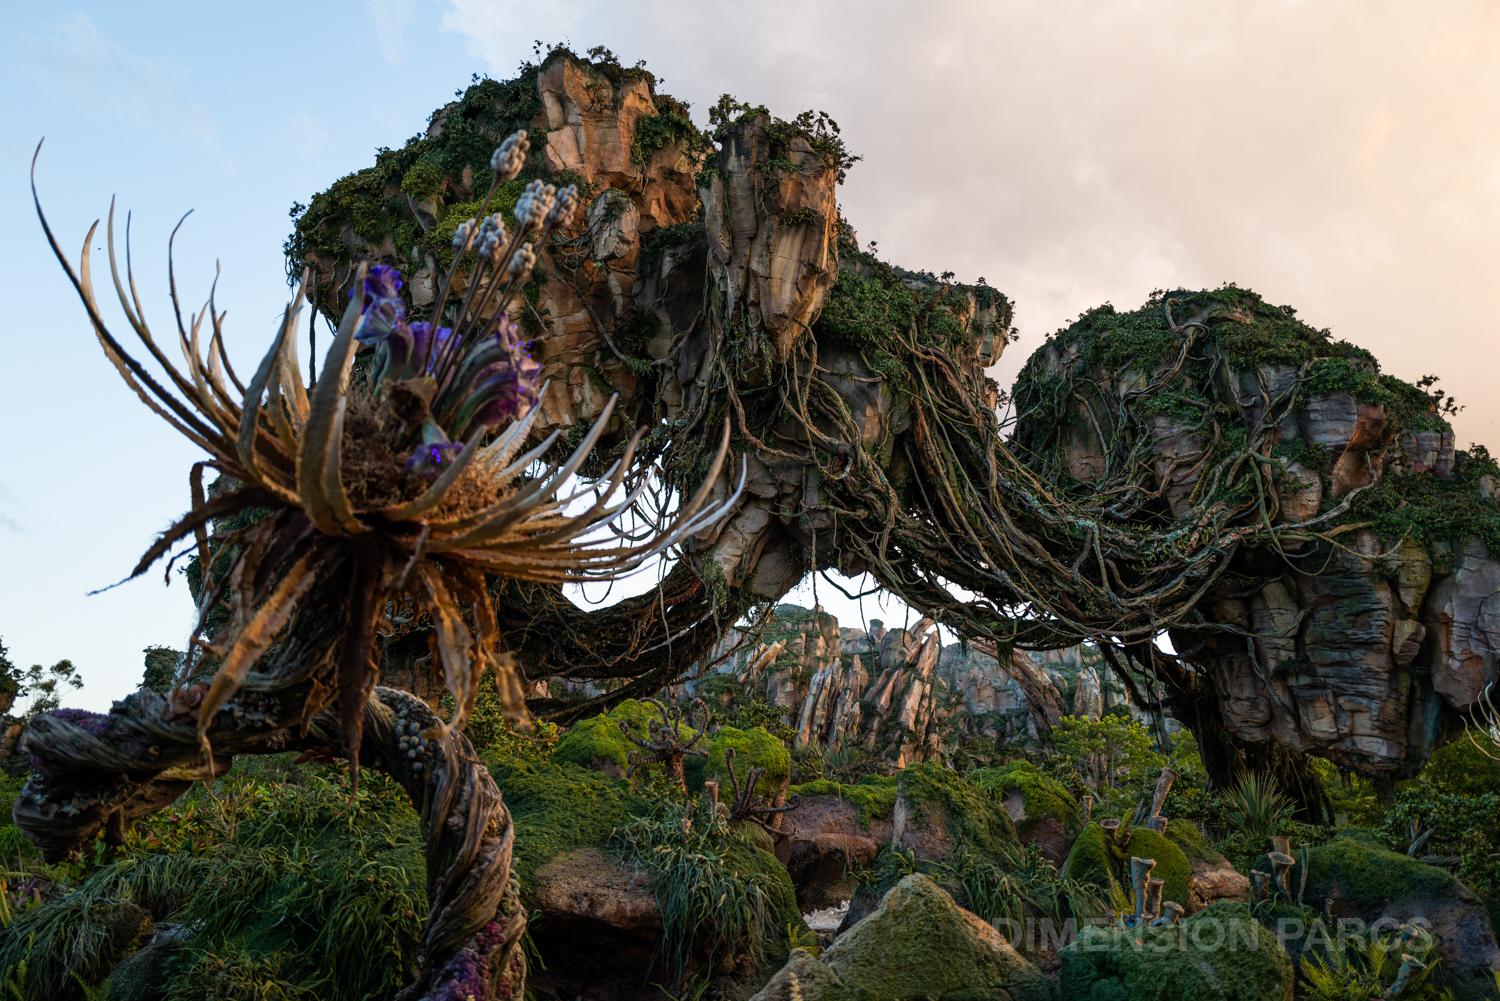 Explorez Pandora – The World of Avatar à Disney’s Animal Kingdom !